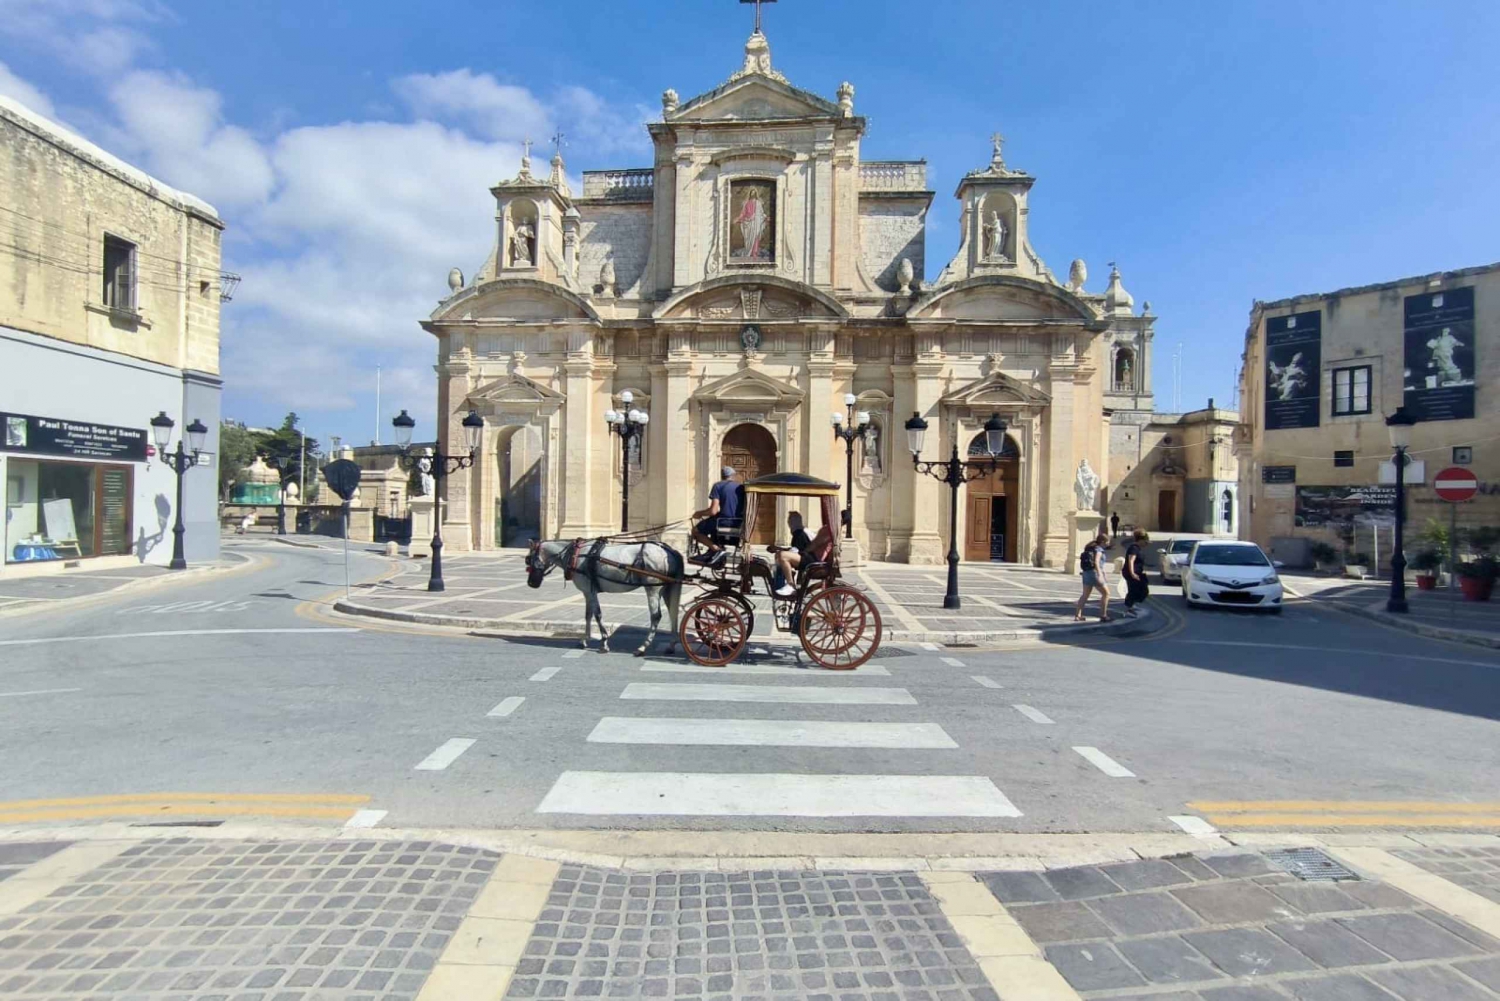 Private Chauffeur: Discover Malta's Treasures with a Local!